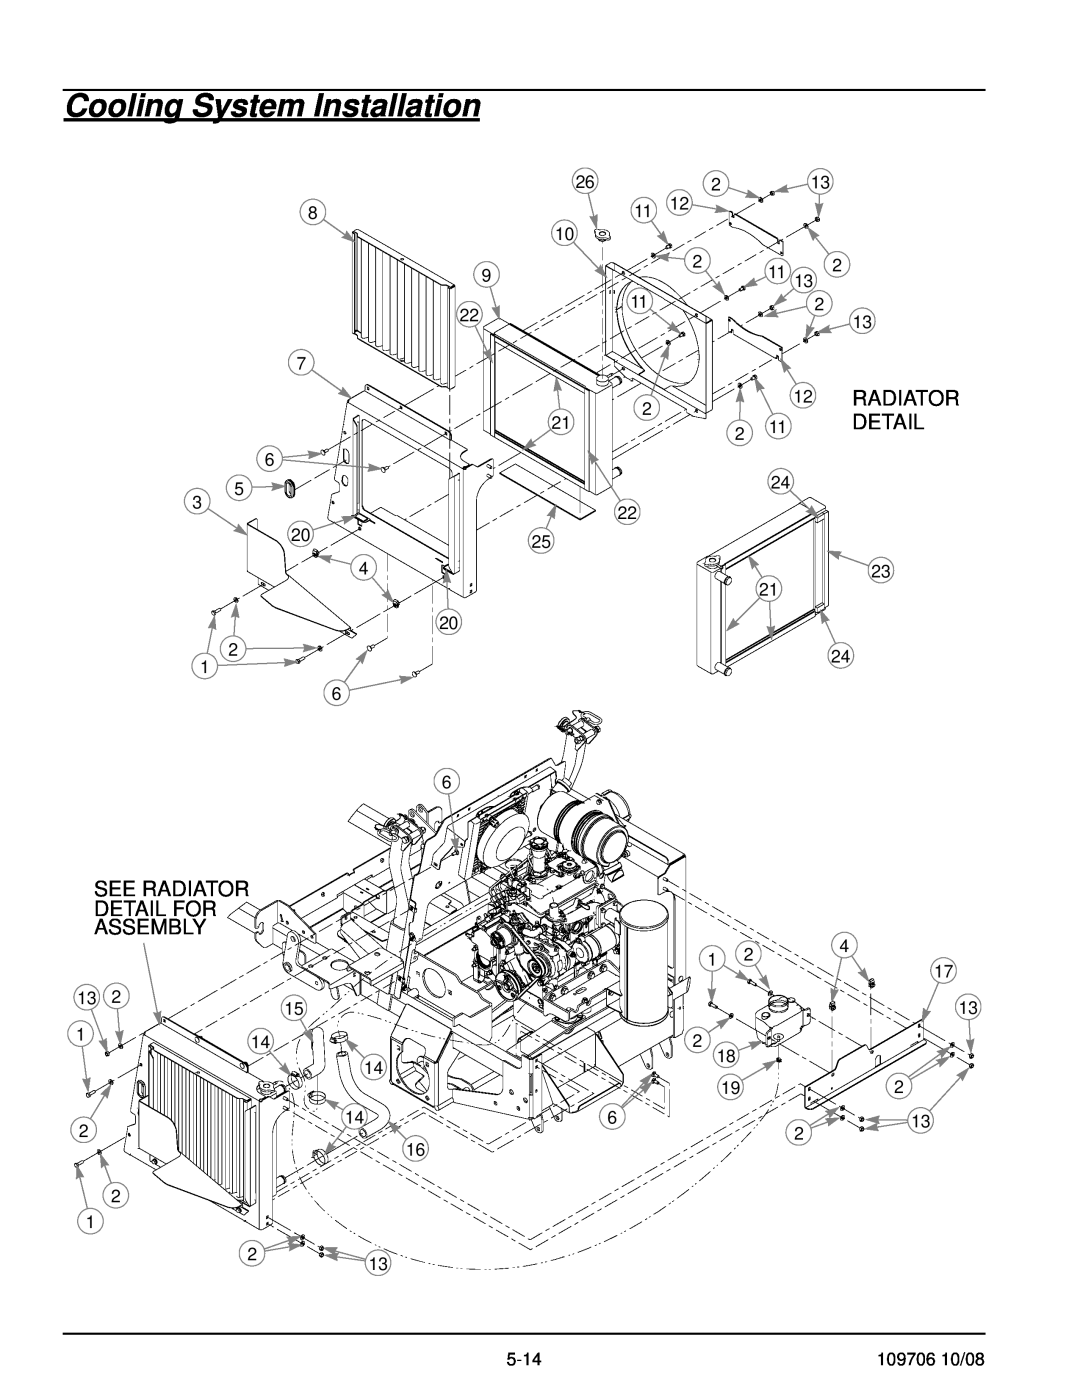 Hustler Turf Diesel Z manual Cooling System Installation, See Radiator Detail For Assembly 